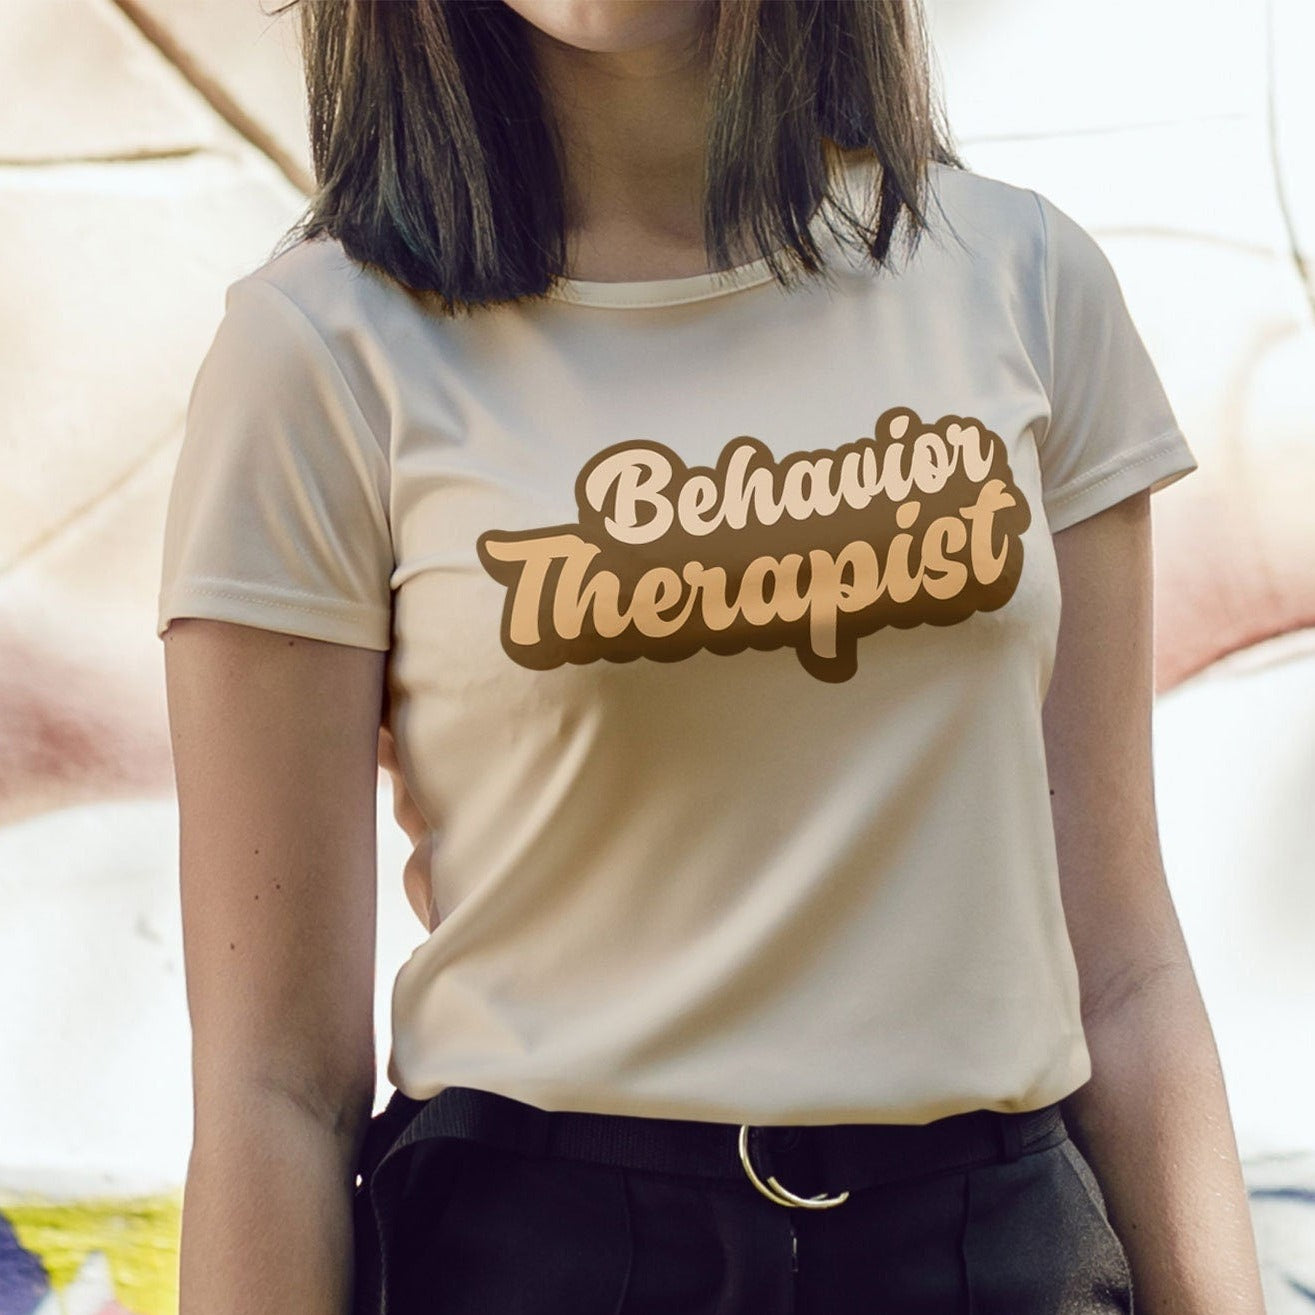 Buy Now BCBA Shirt For Behavior Analyst ABA Therapy BCBA Gift 